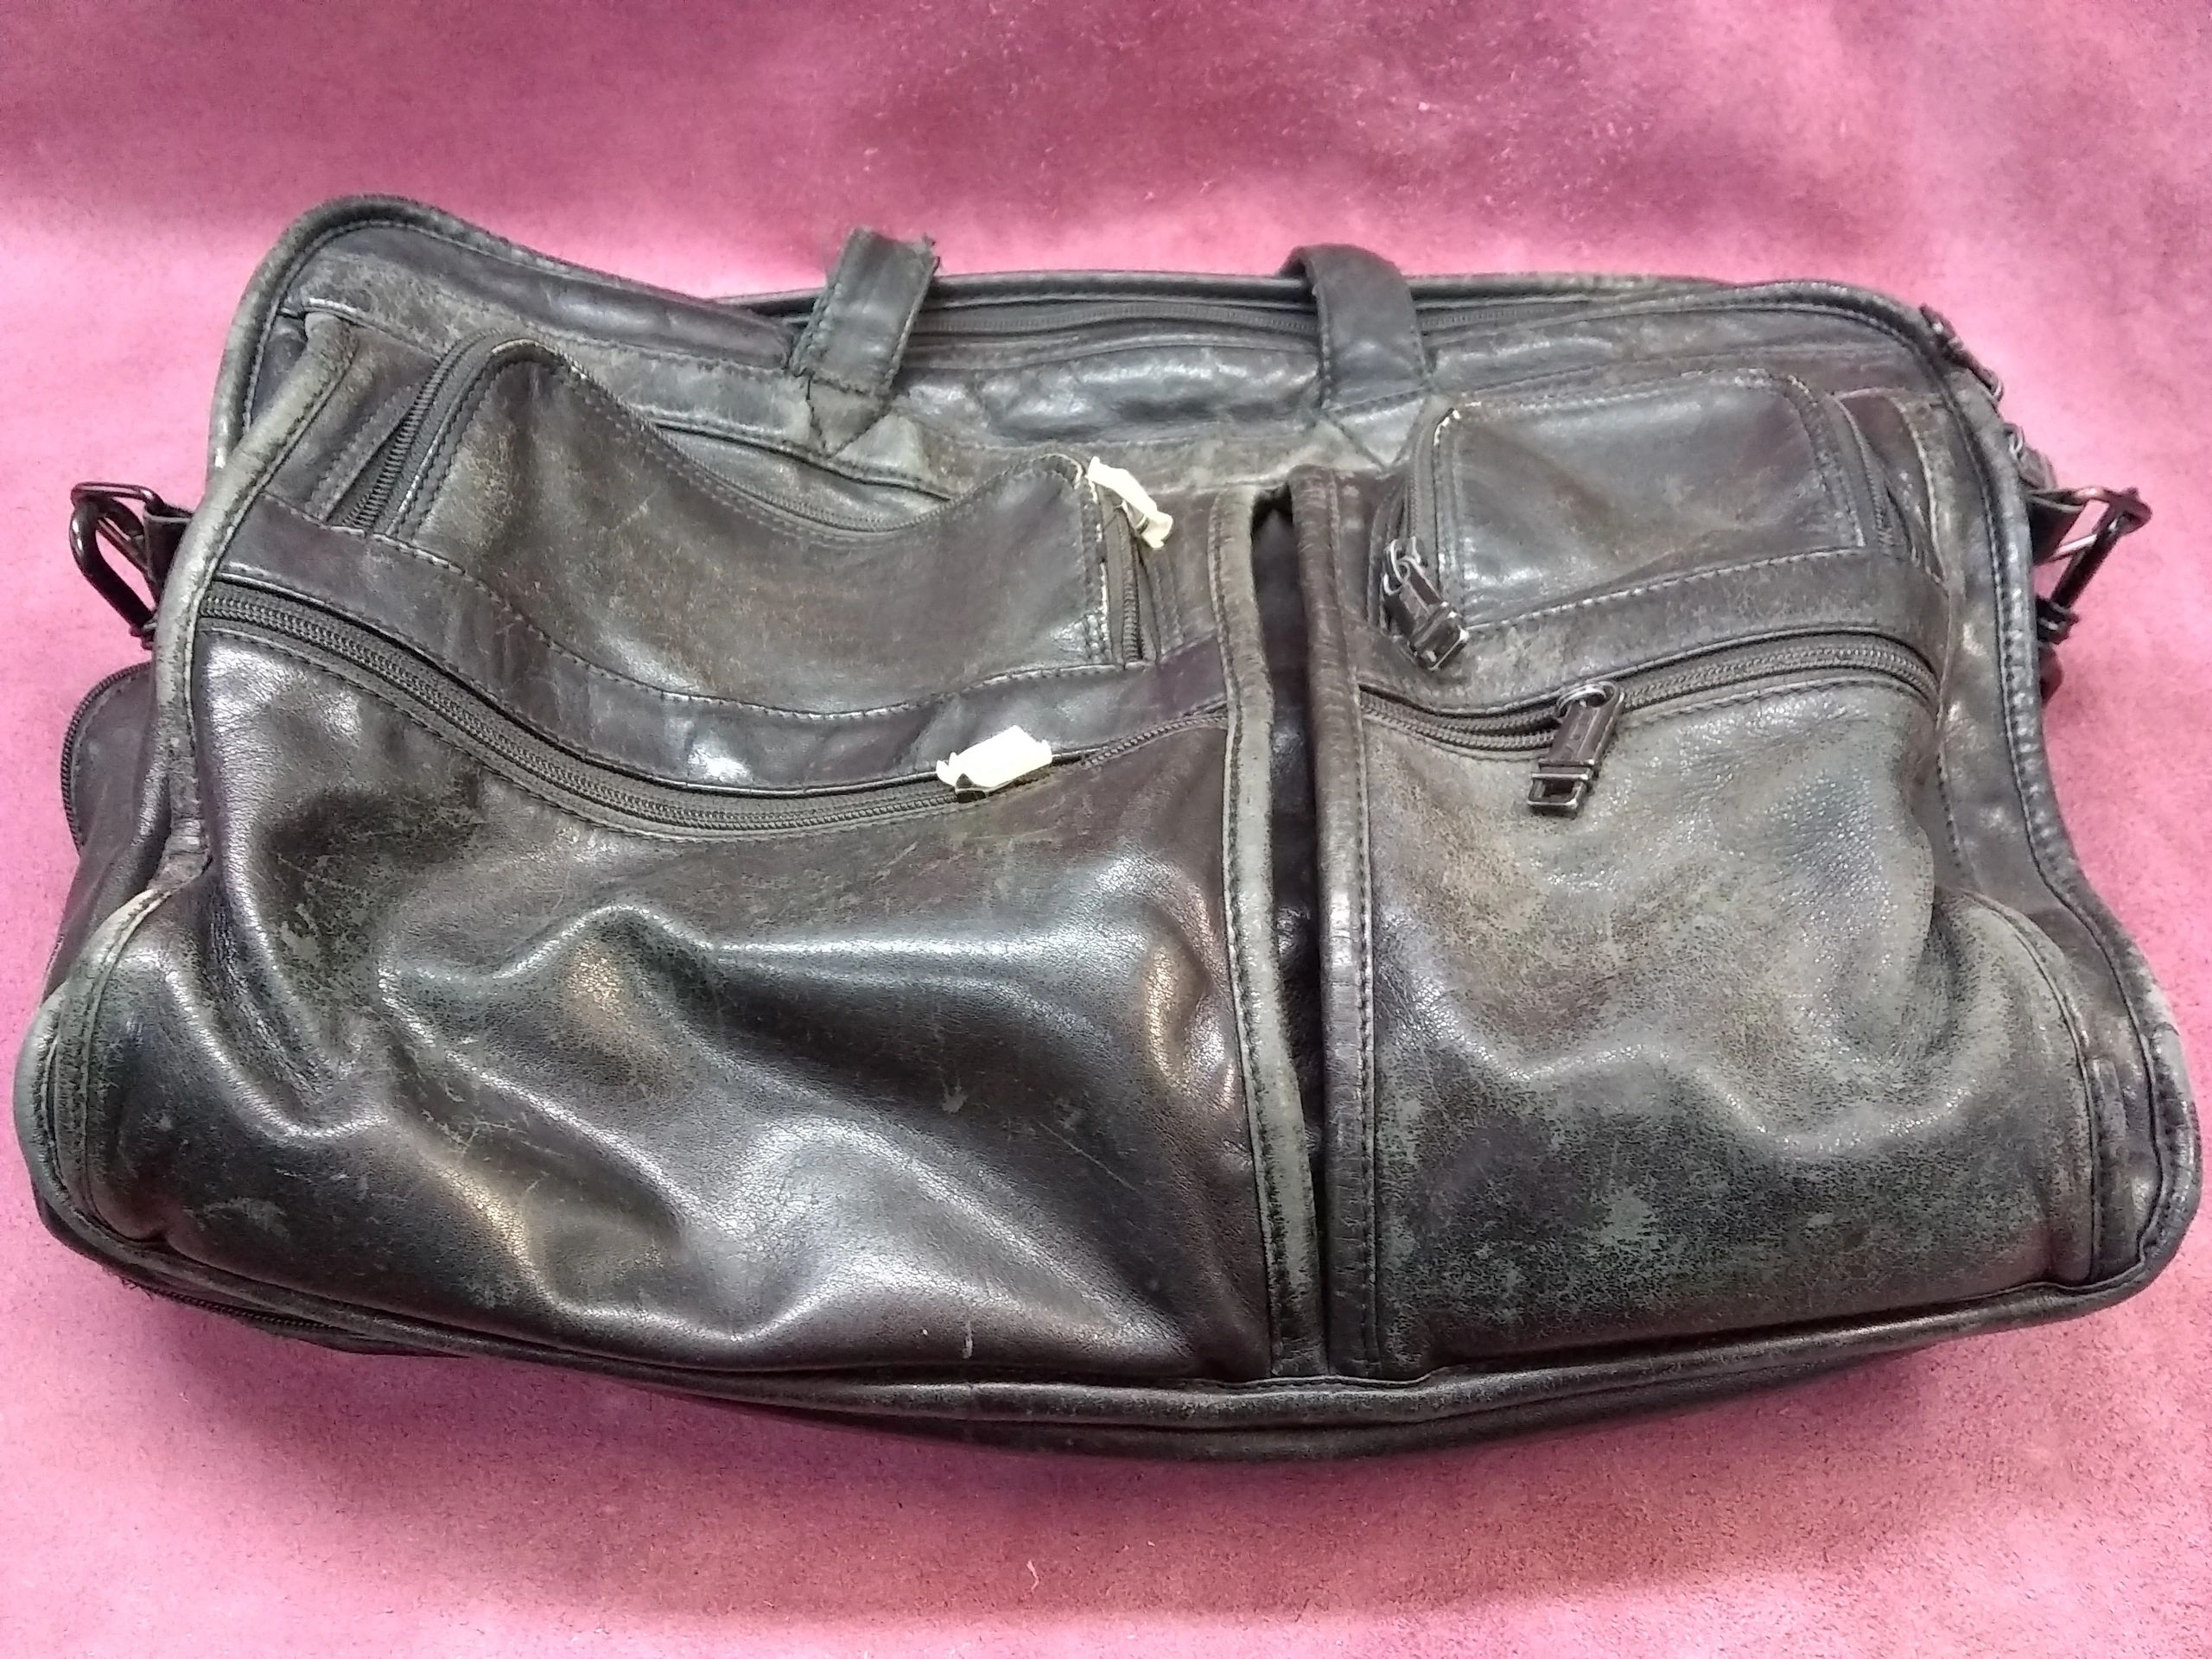 leather bag repair shop winter haven fl